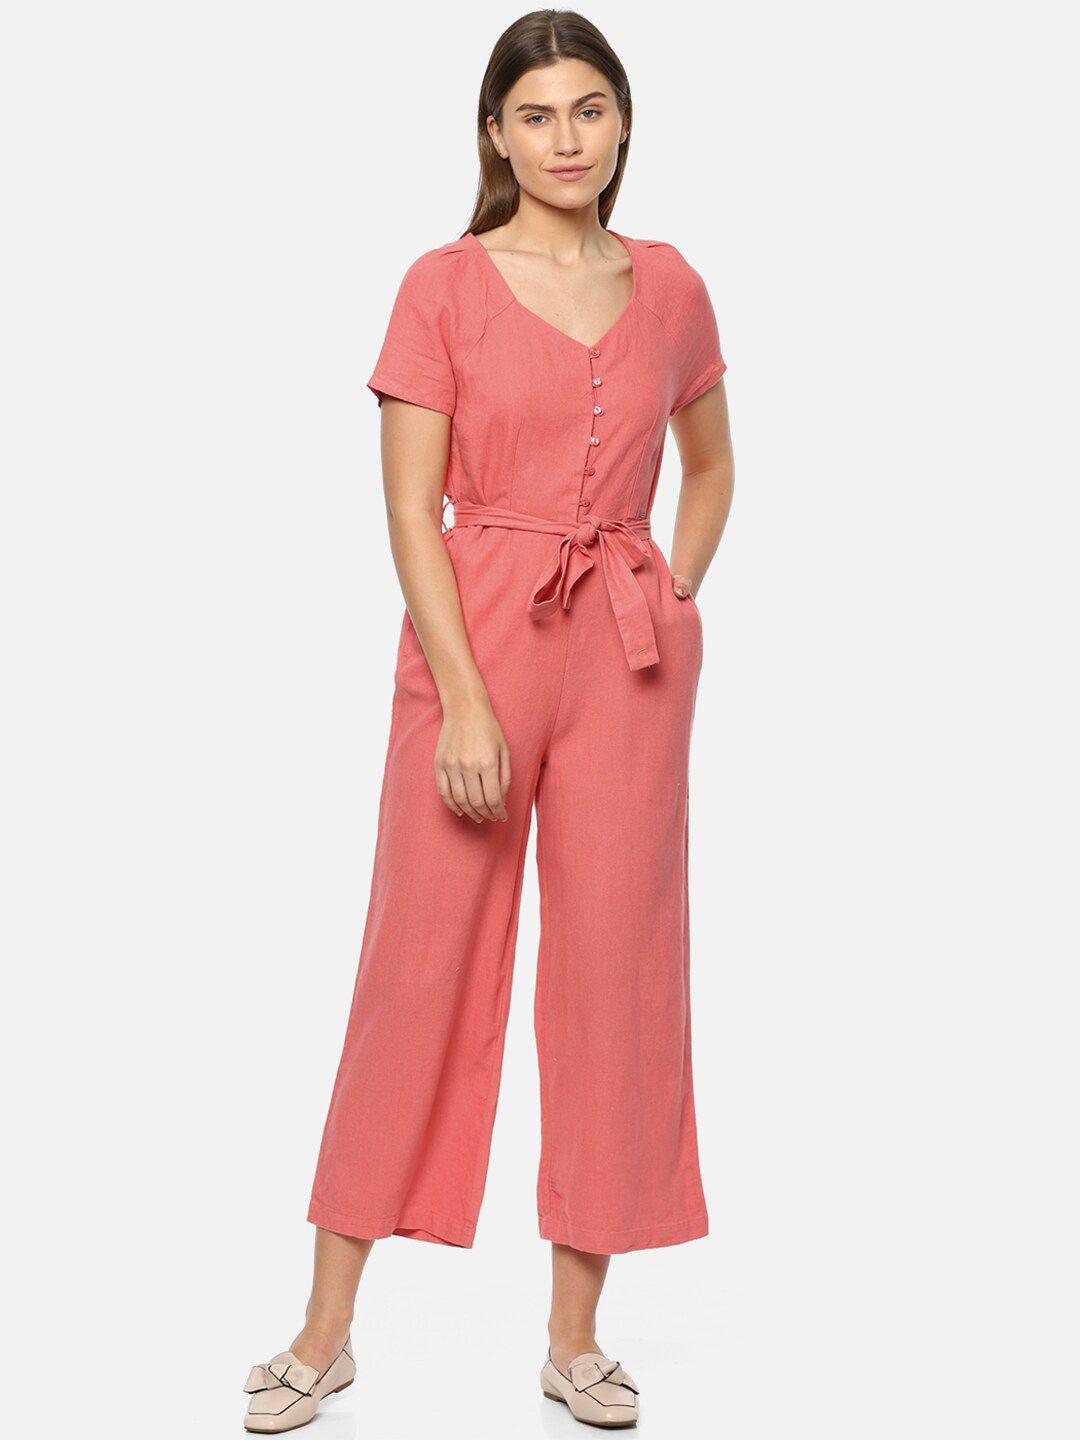 allen solly woman pink linen culotte jumpsuit